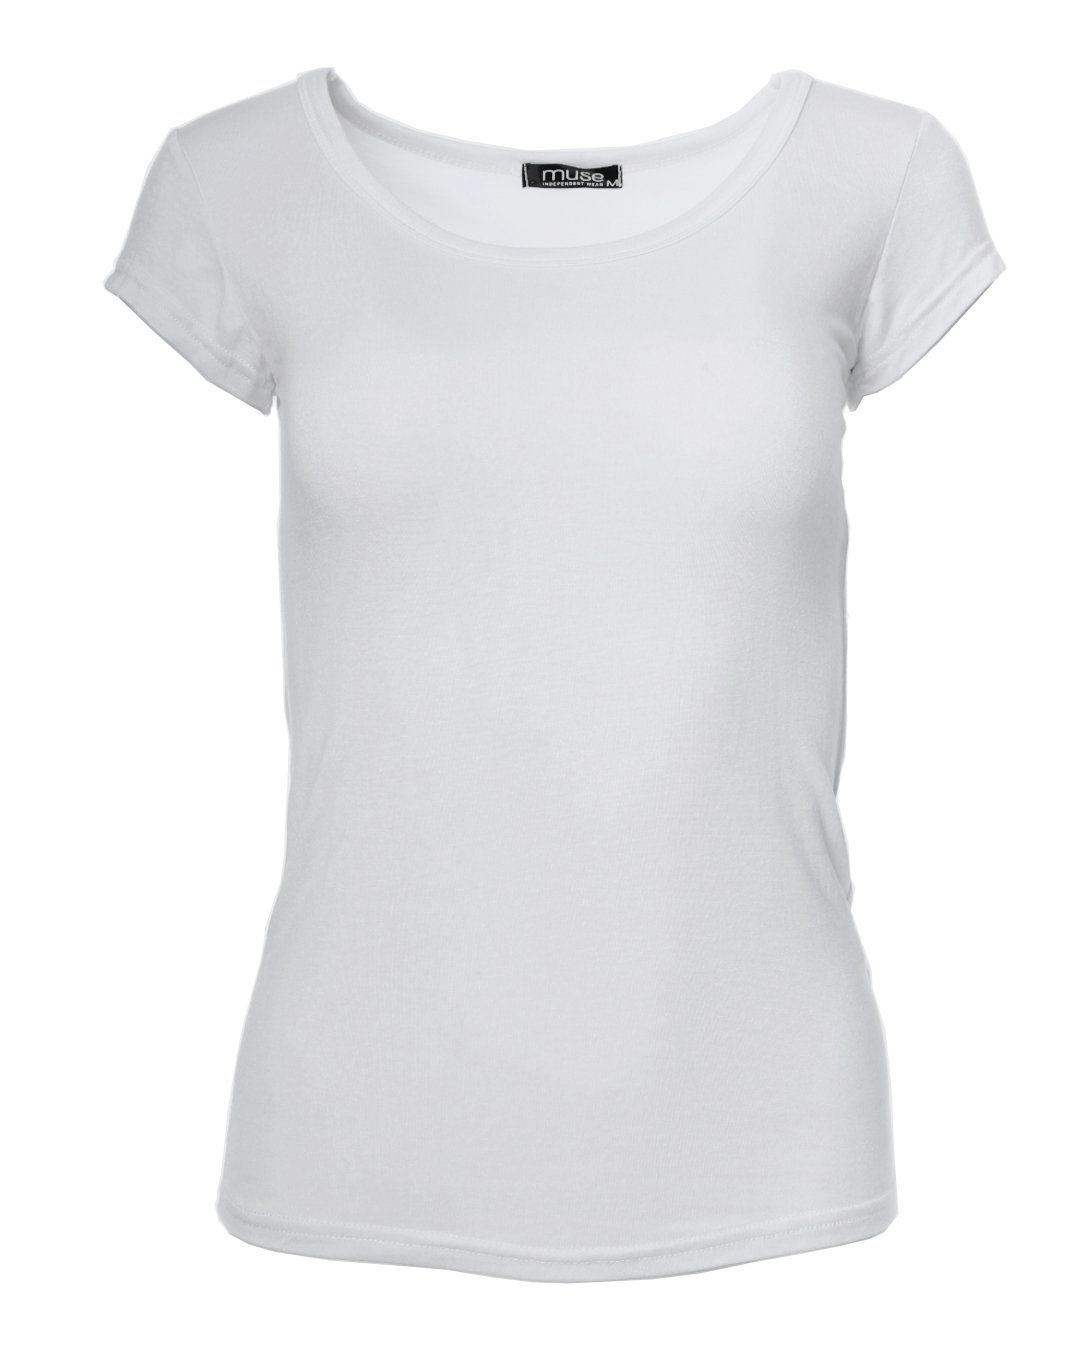 1001 T-Shirt Kurzarm Muse T-Shirt Fit Basic weiß Skinny